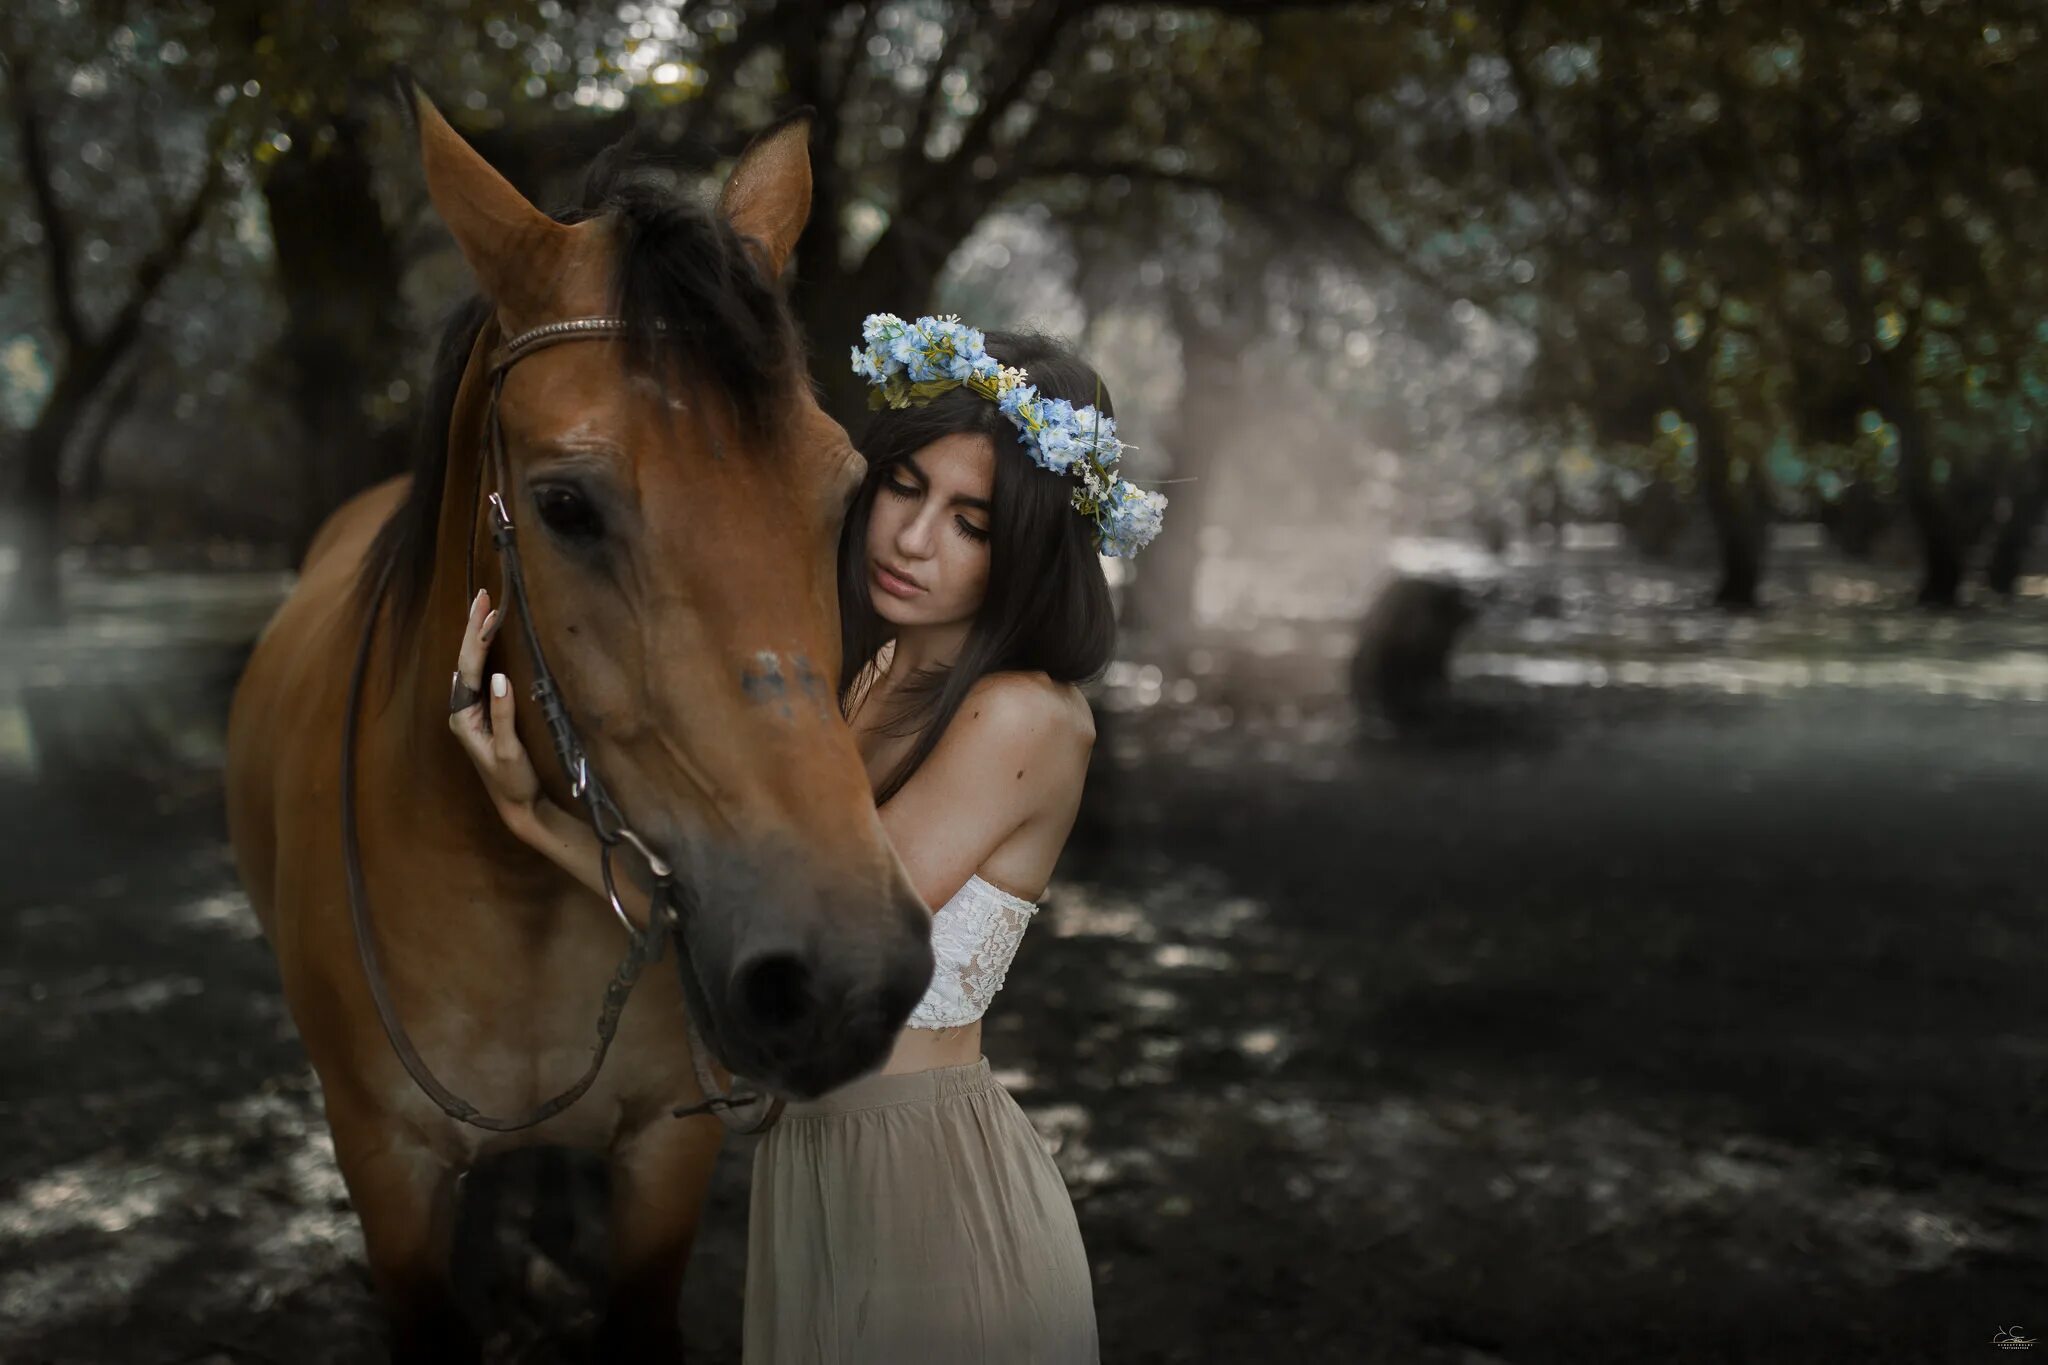 Девки и лошади. Фотосессия с лошадьми. Фотосет с лошадью. Девушка с лошадью. Красивая фотосессия с лошадью.